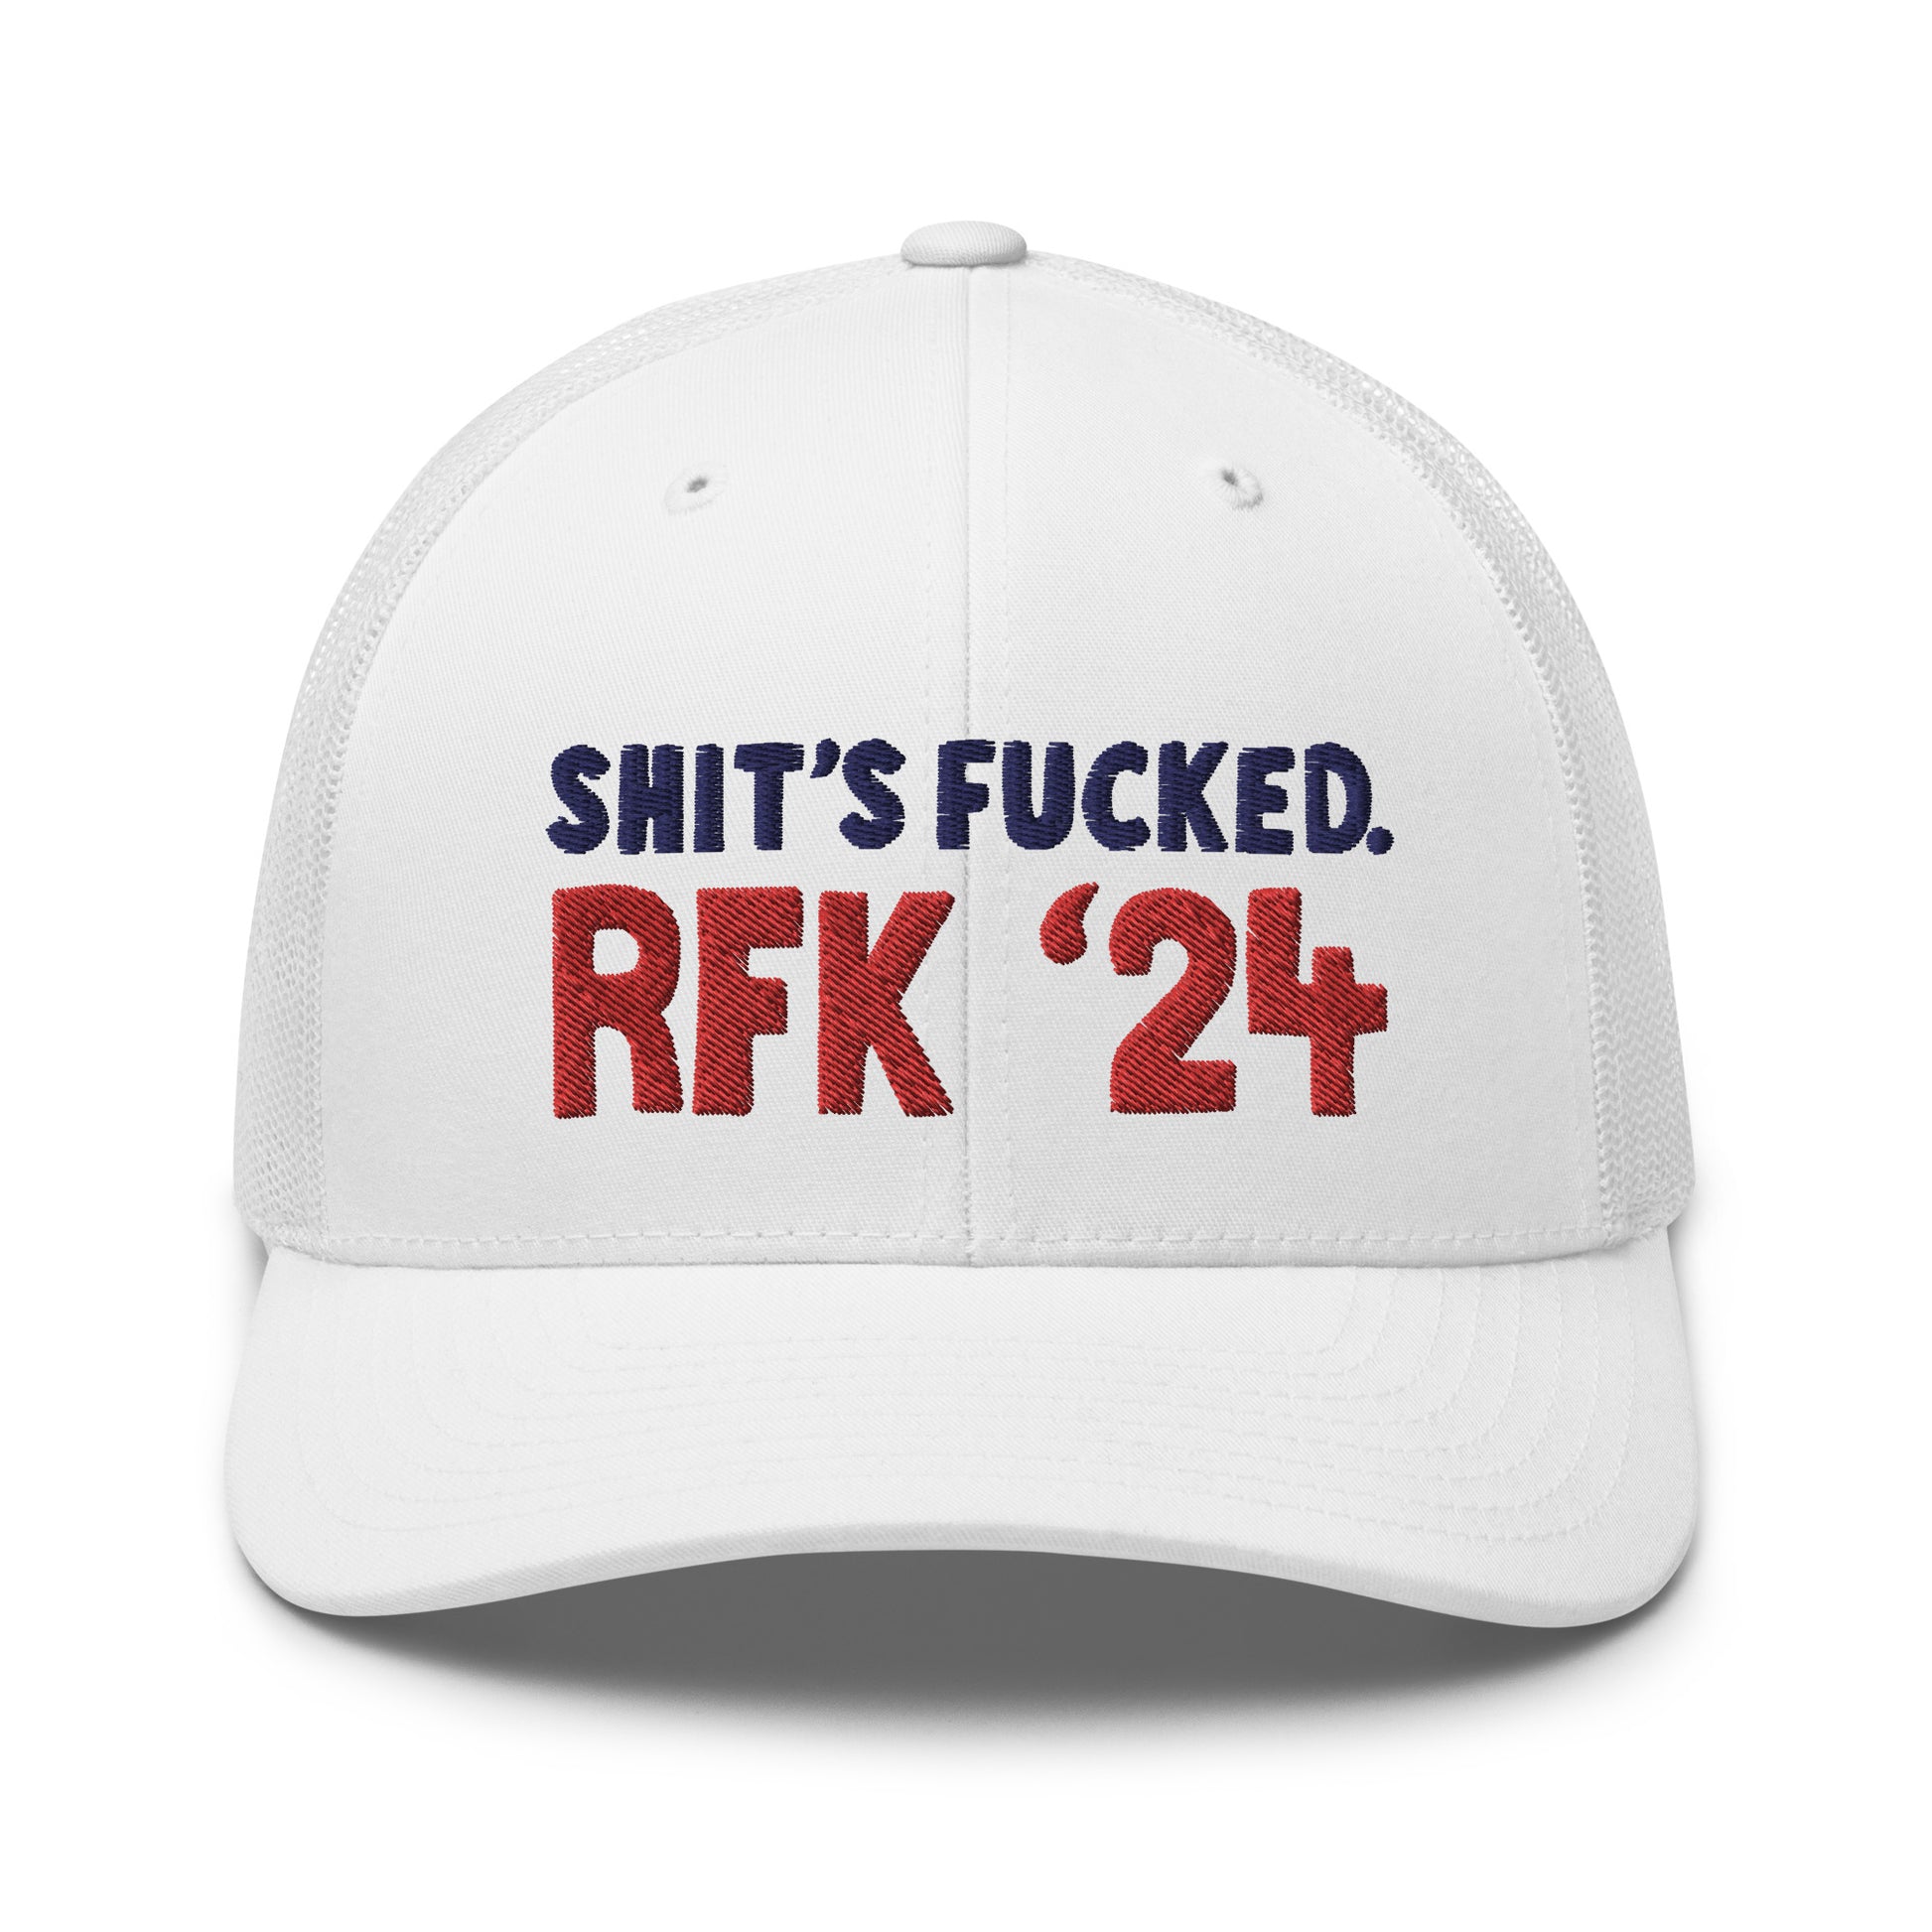 Shits fucked RFK 24 hat